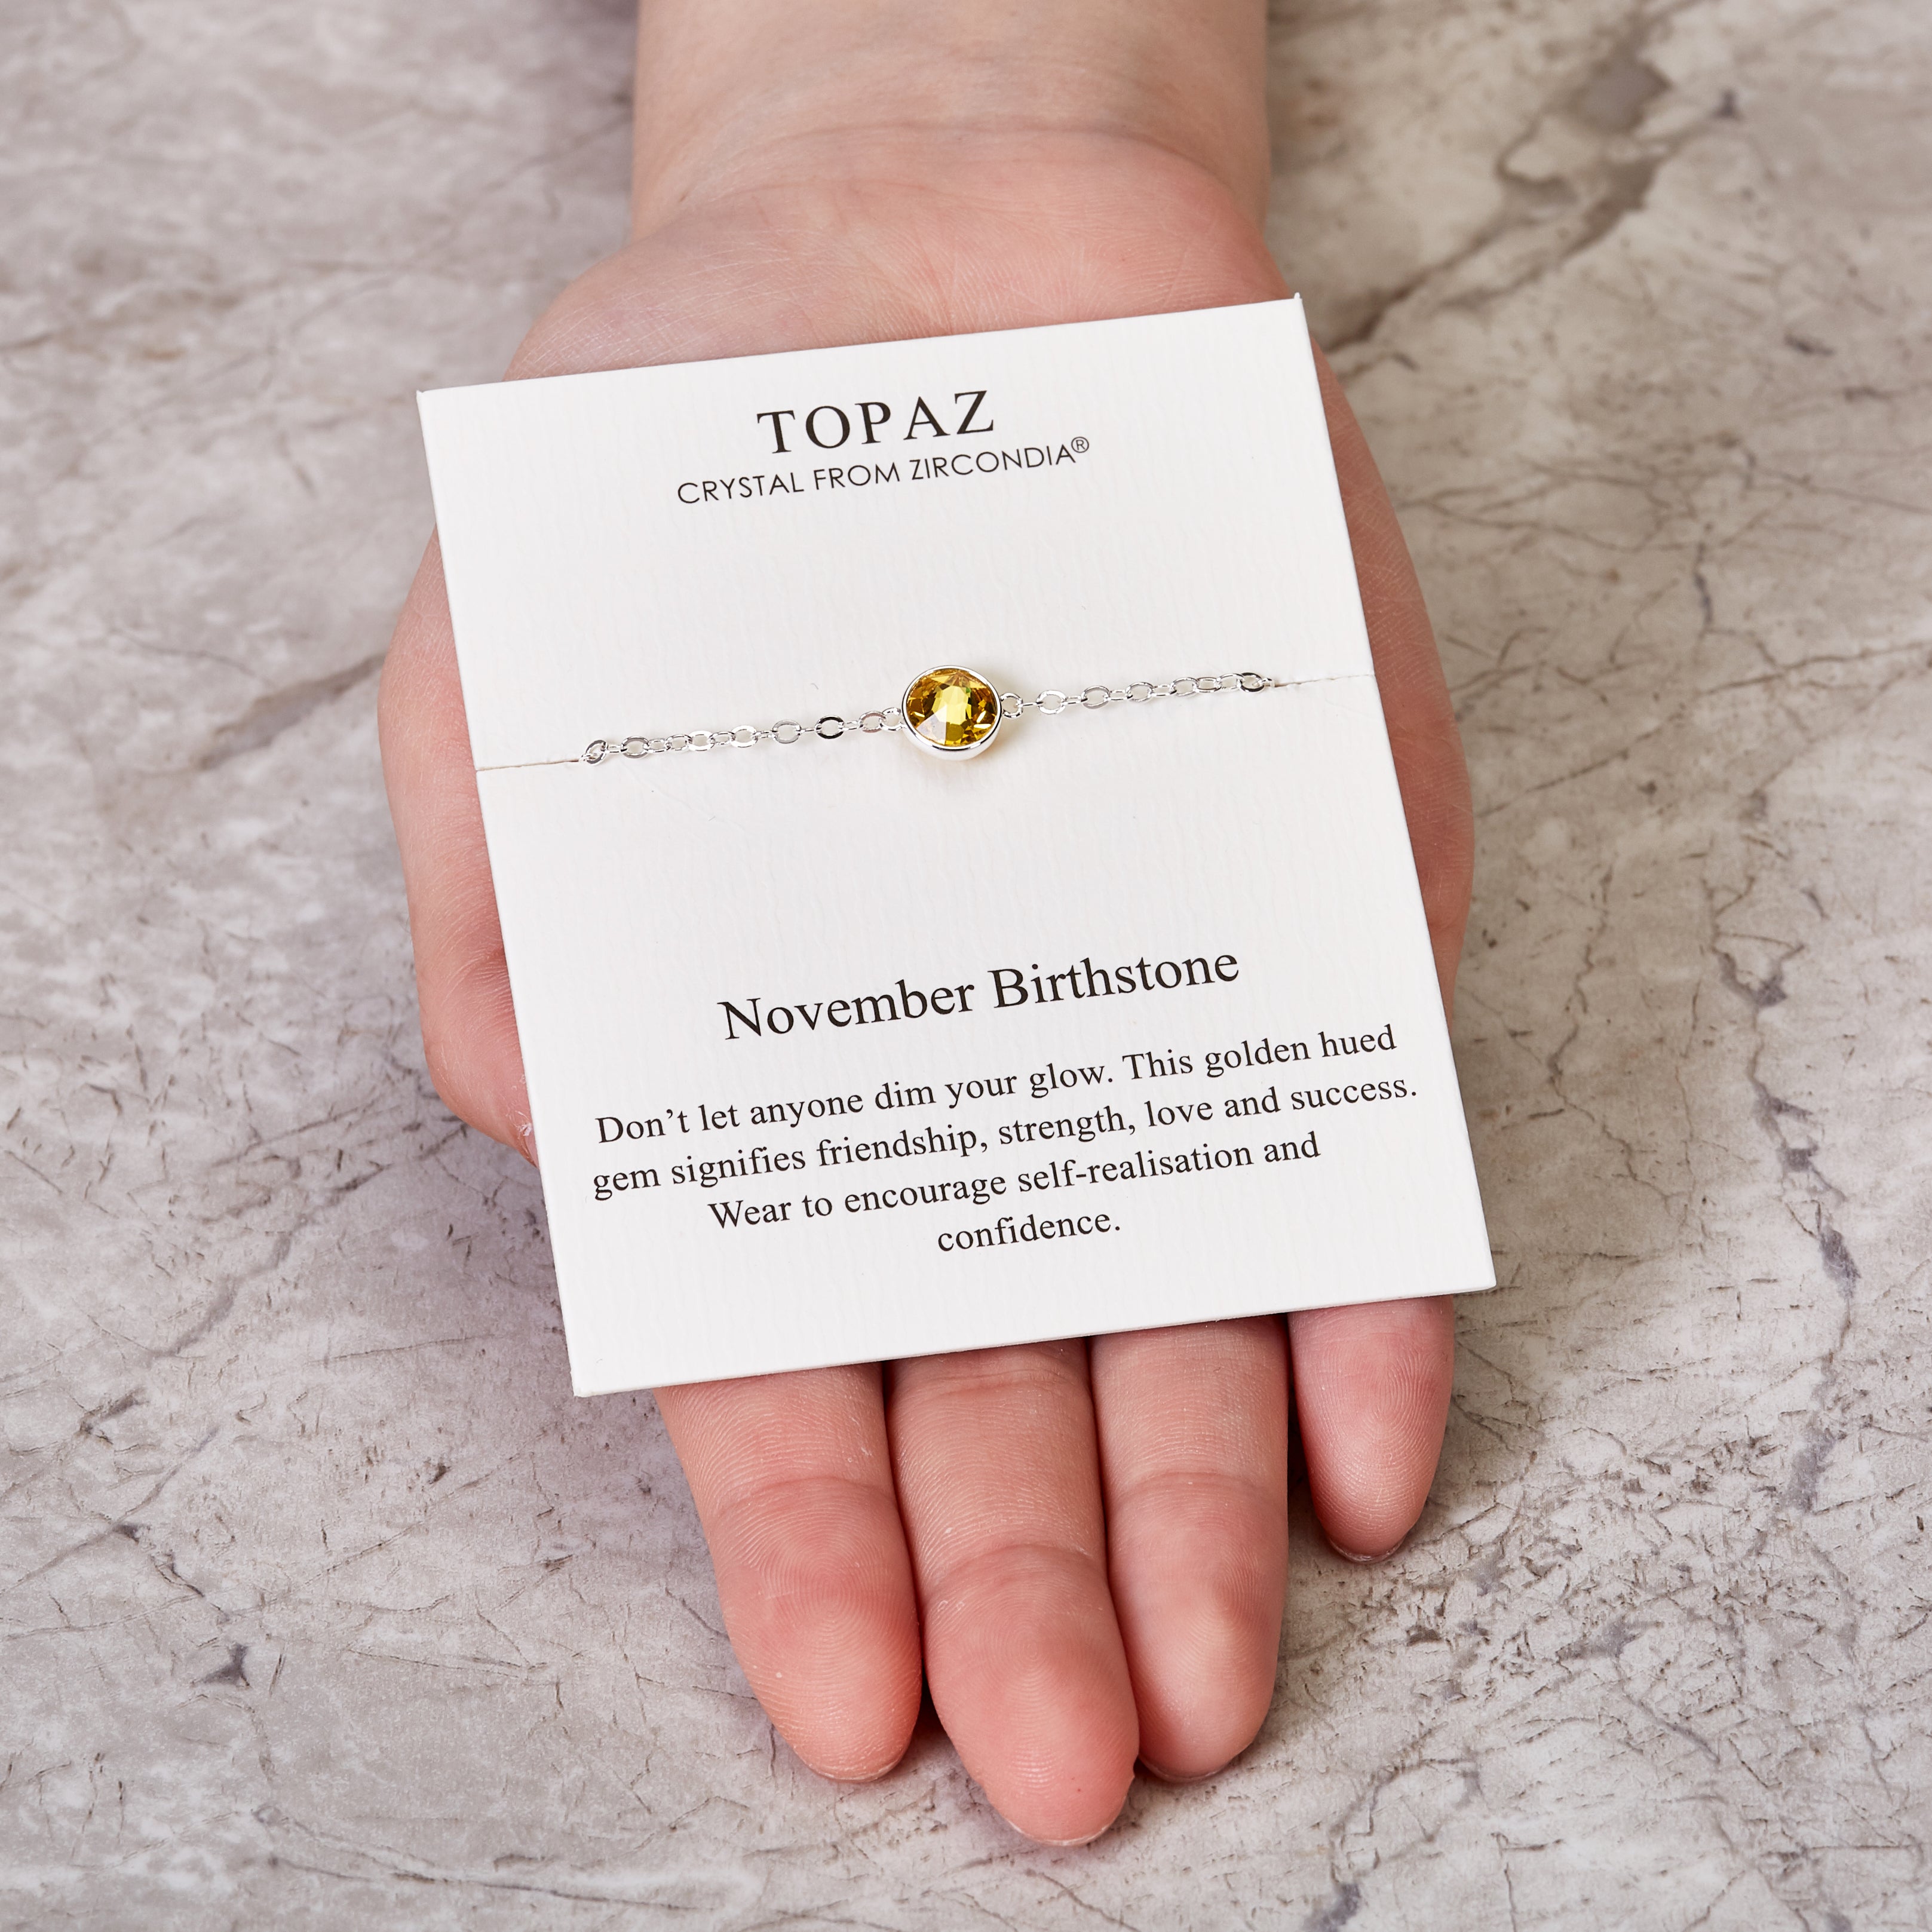 November (Topaz) Birthstone Anklet Created with Zircondia® Crystals